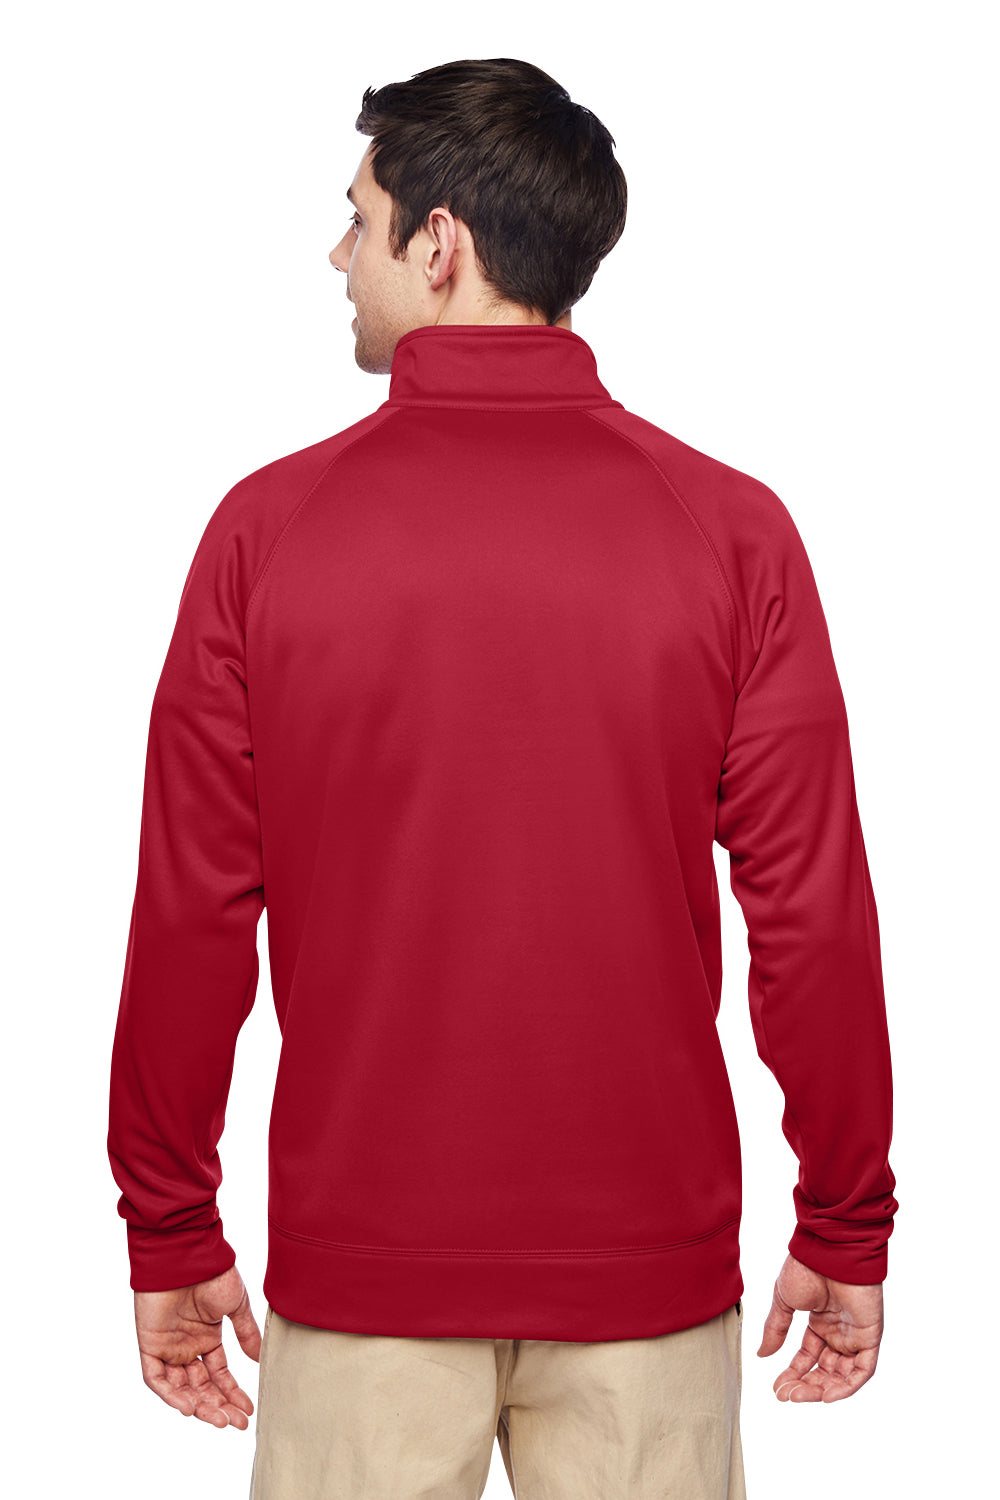 Jerzees PF95MR Mens Dri-Power Moisture Wicking 1/4 Zip Sweatshirt Red Back